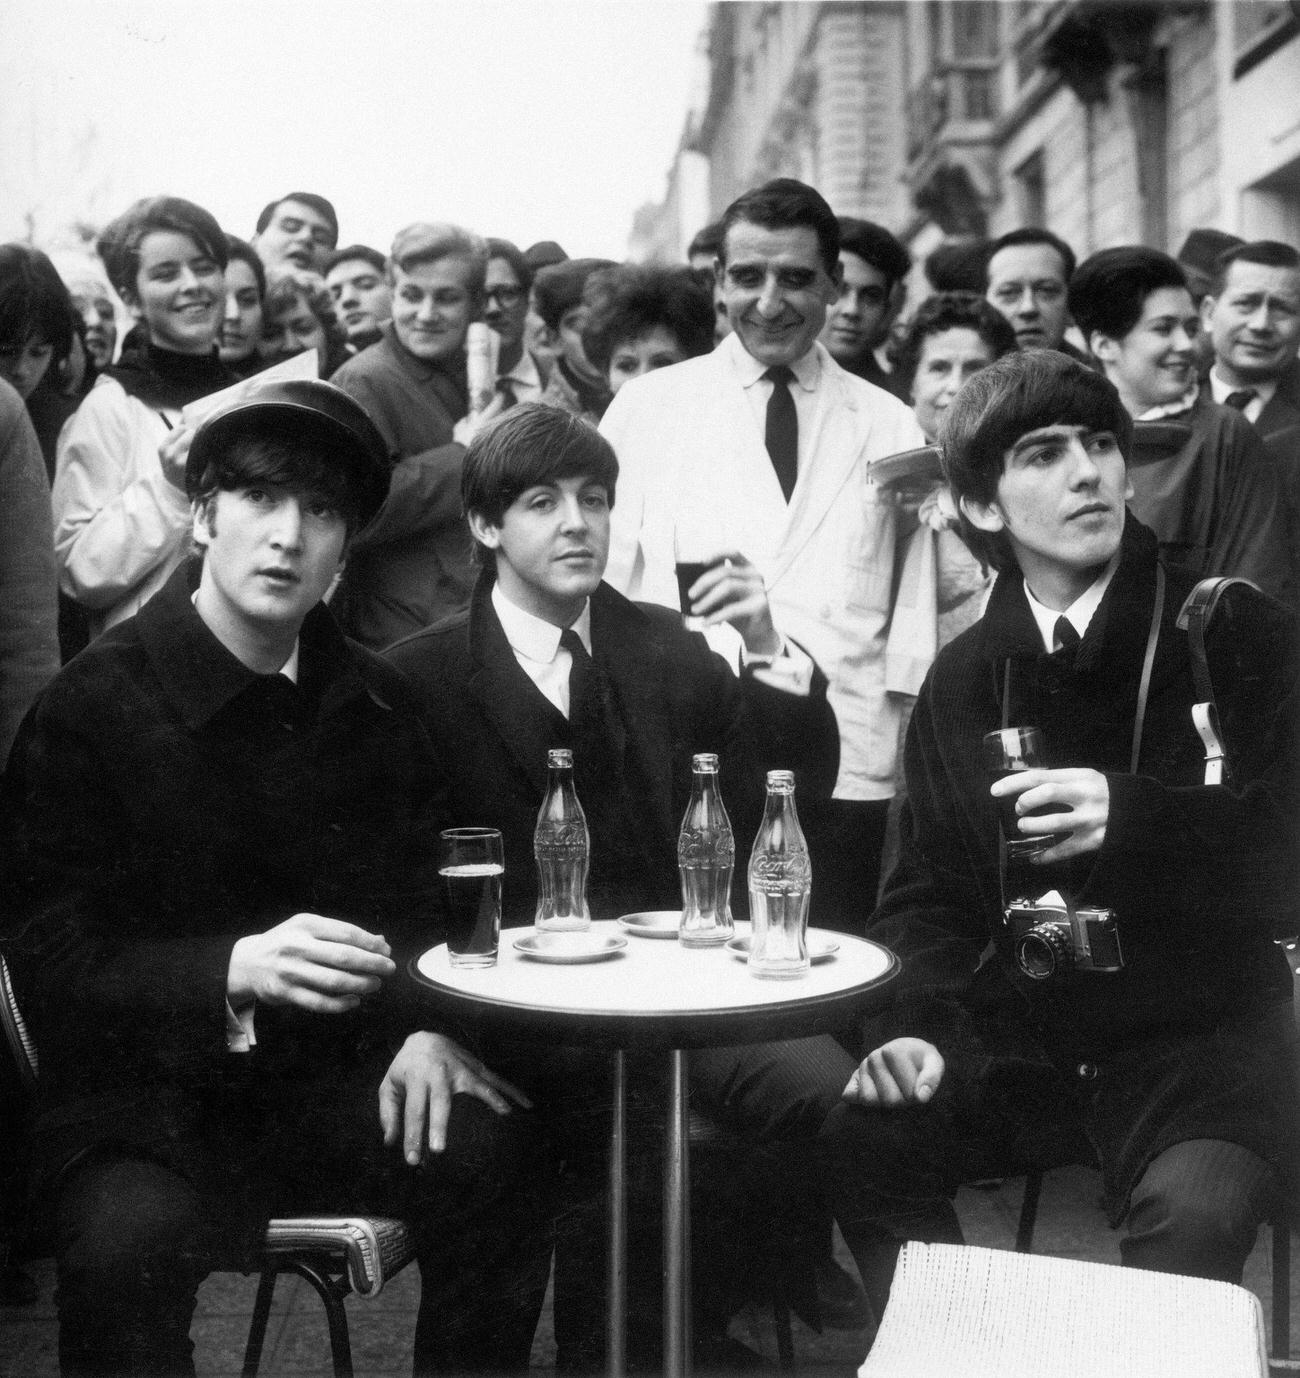 Beatles John, Paul, and George enjoying Coca-Cola at a cafe in Paris1964.